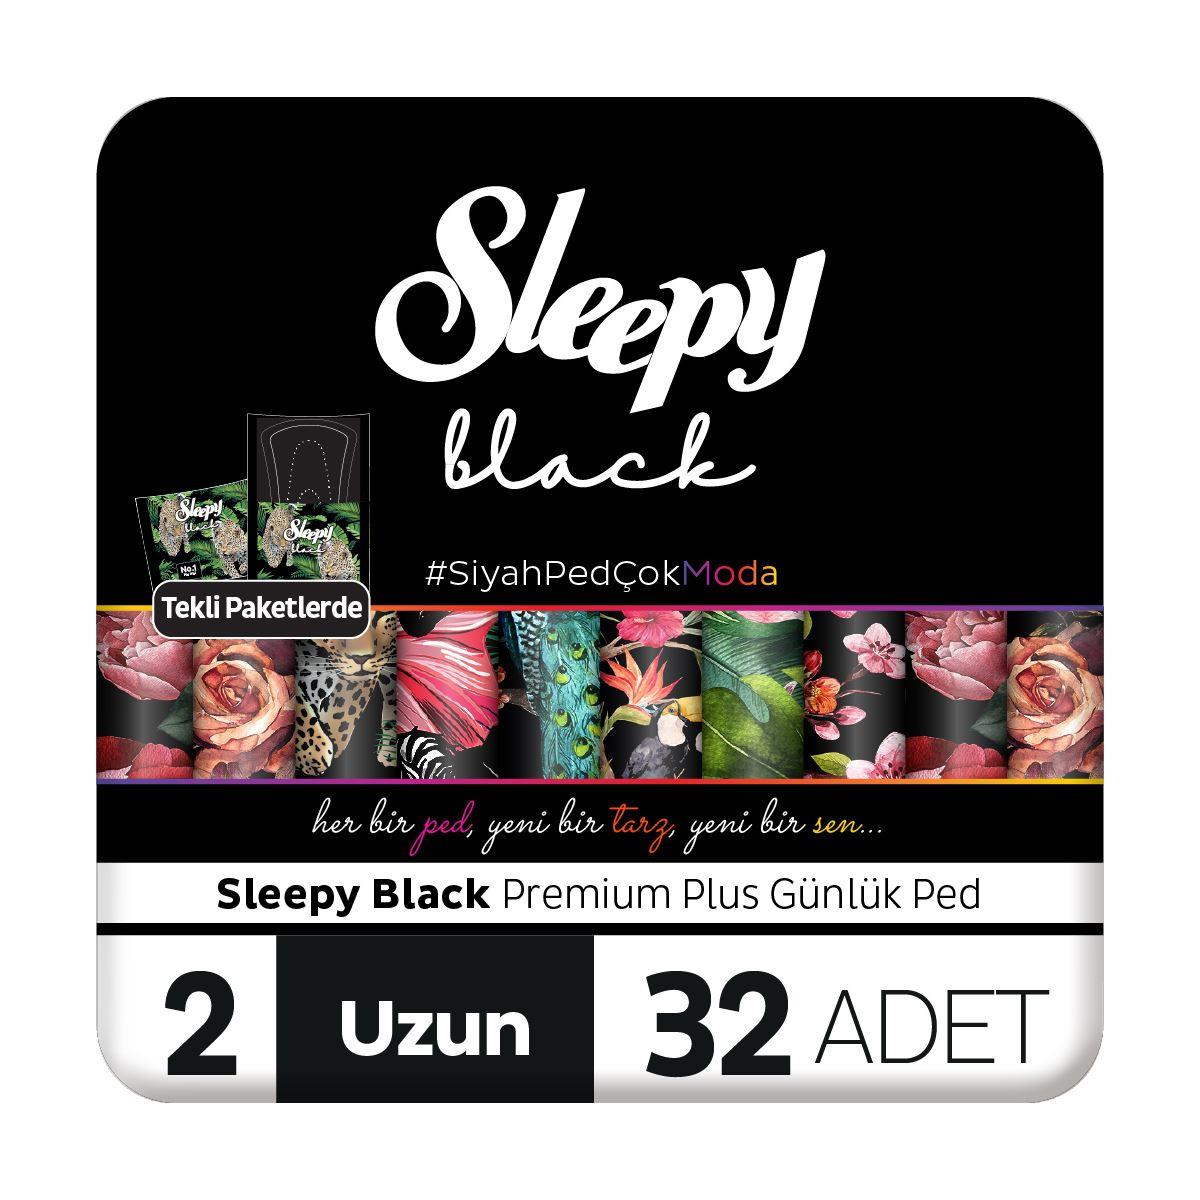 Sleepy Black Premium Plus Günlük Ped Uzun 32x2 64 Adet Ped